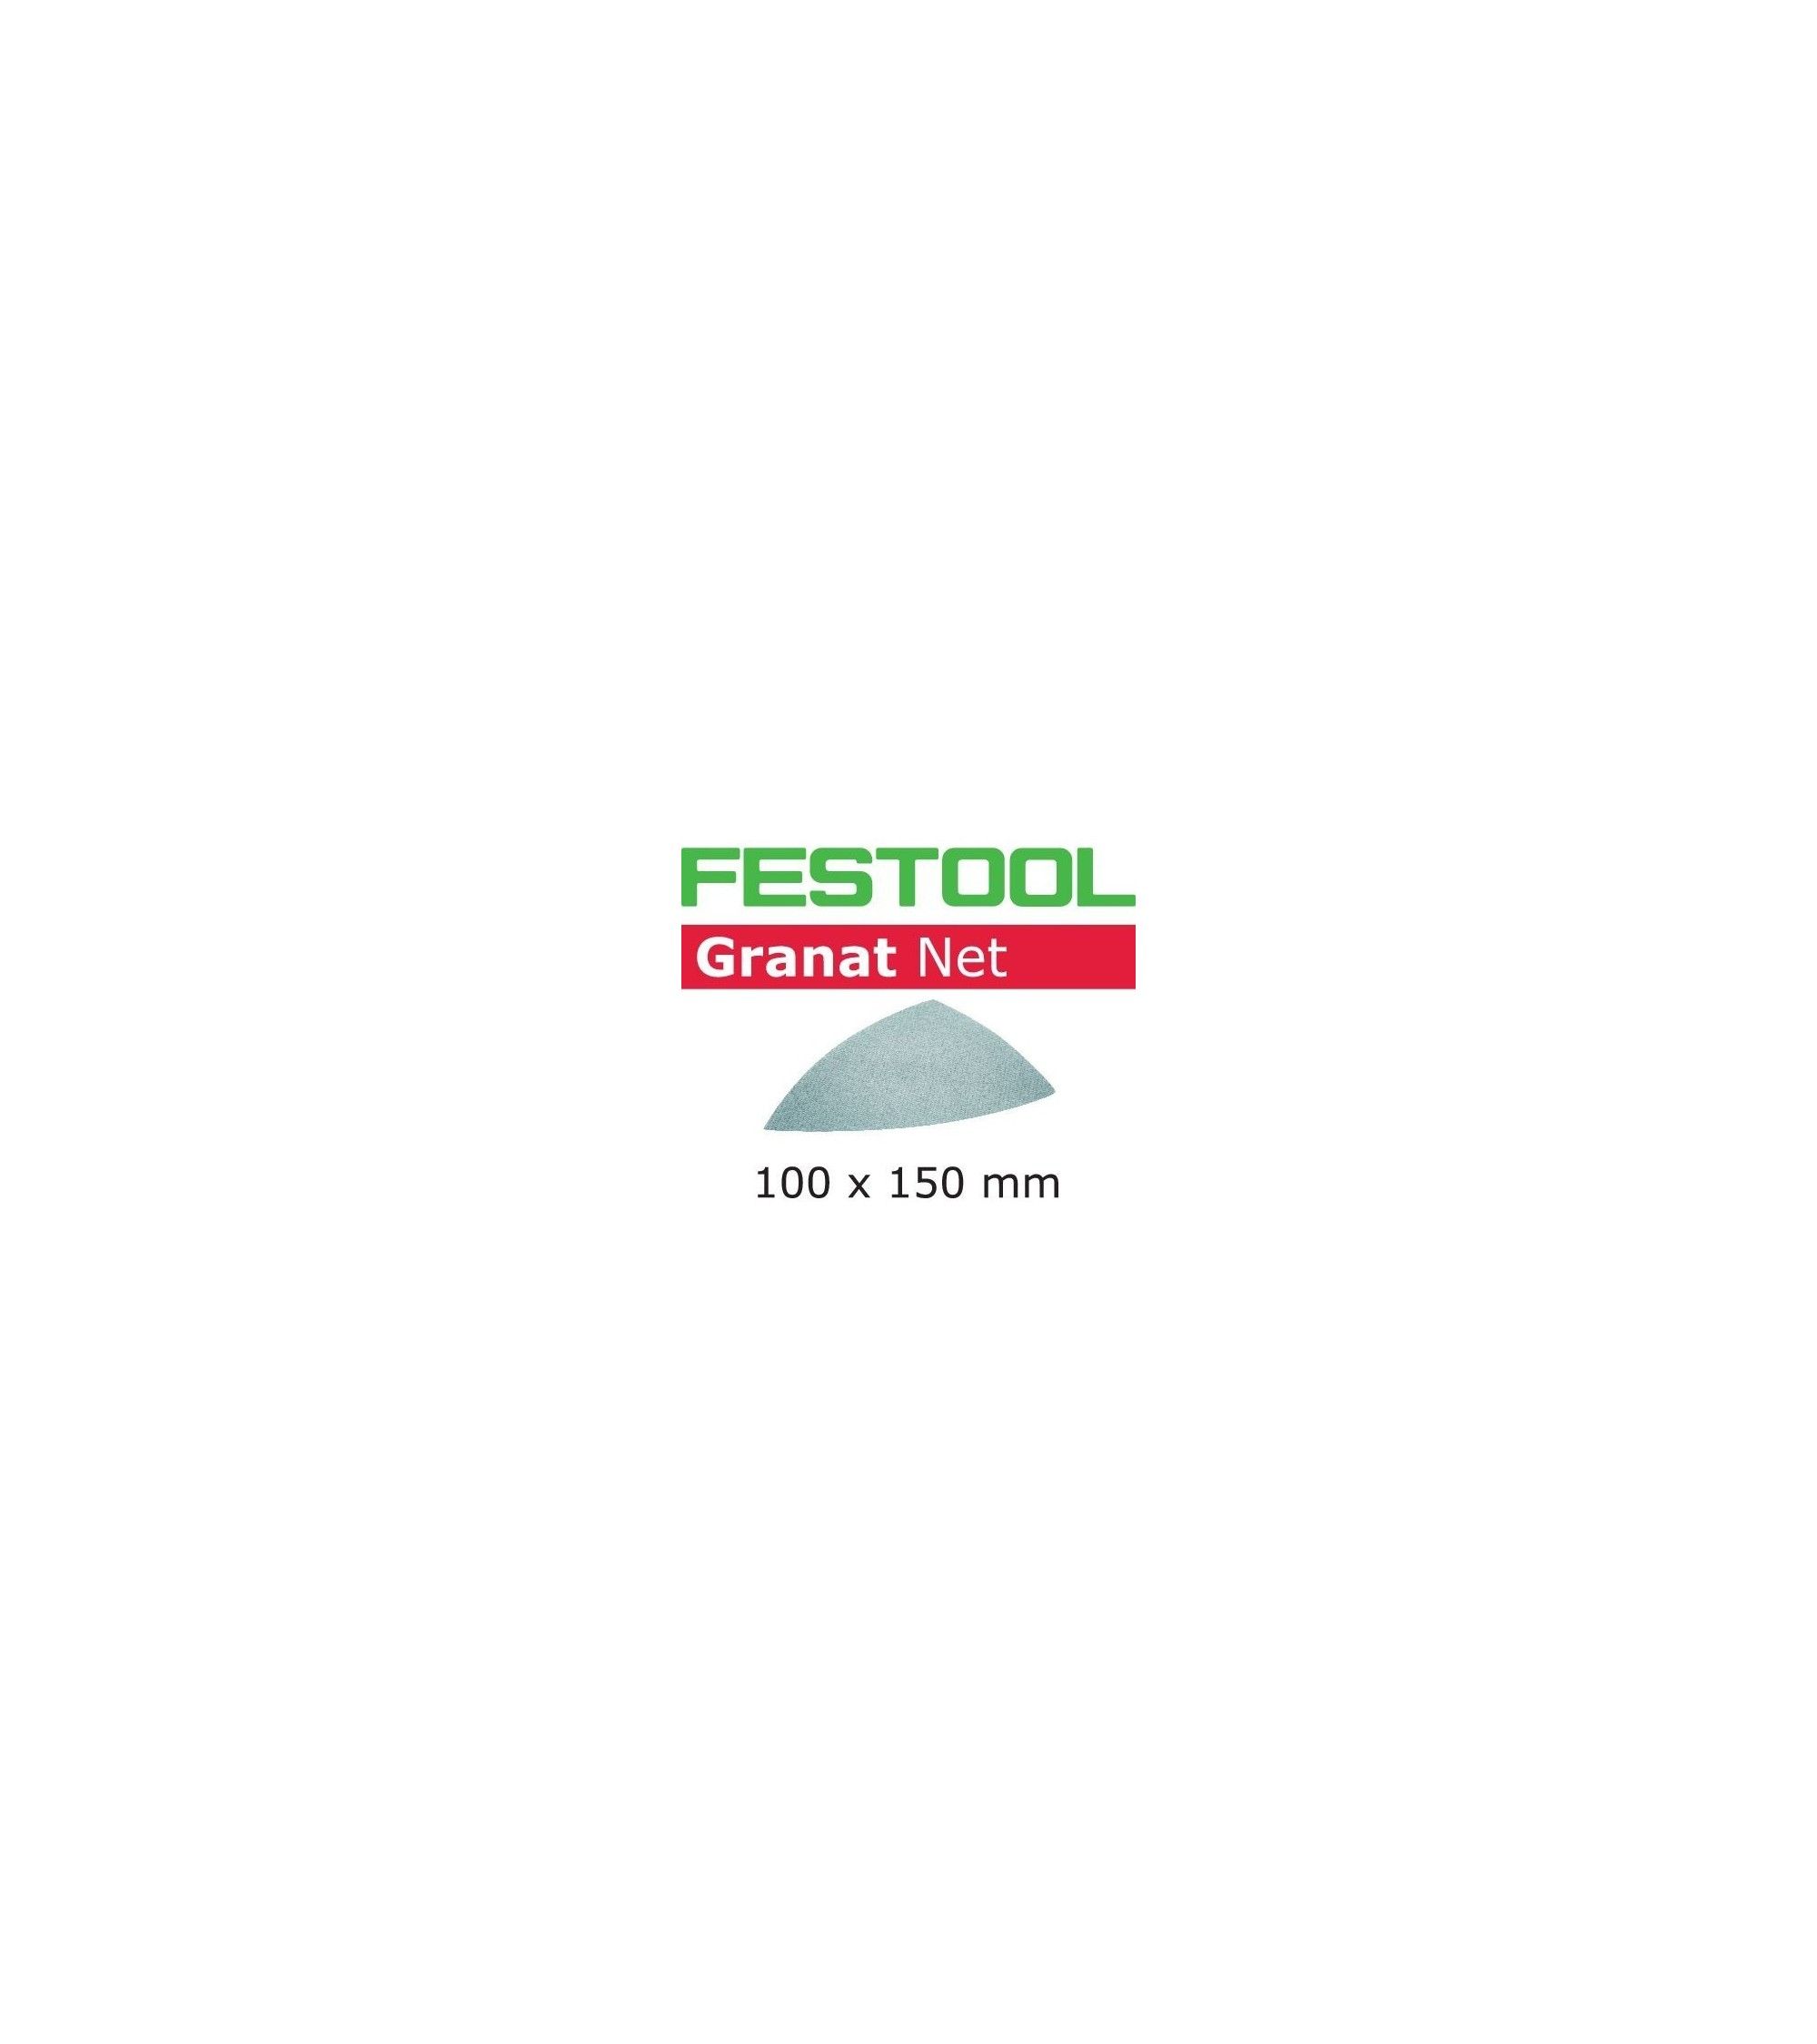 Festool Abrasive net STF DELTA P120 GR NET/50 Granat Net, KAINA BE PVM: 49.77, KODAS: 203322 | 001